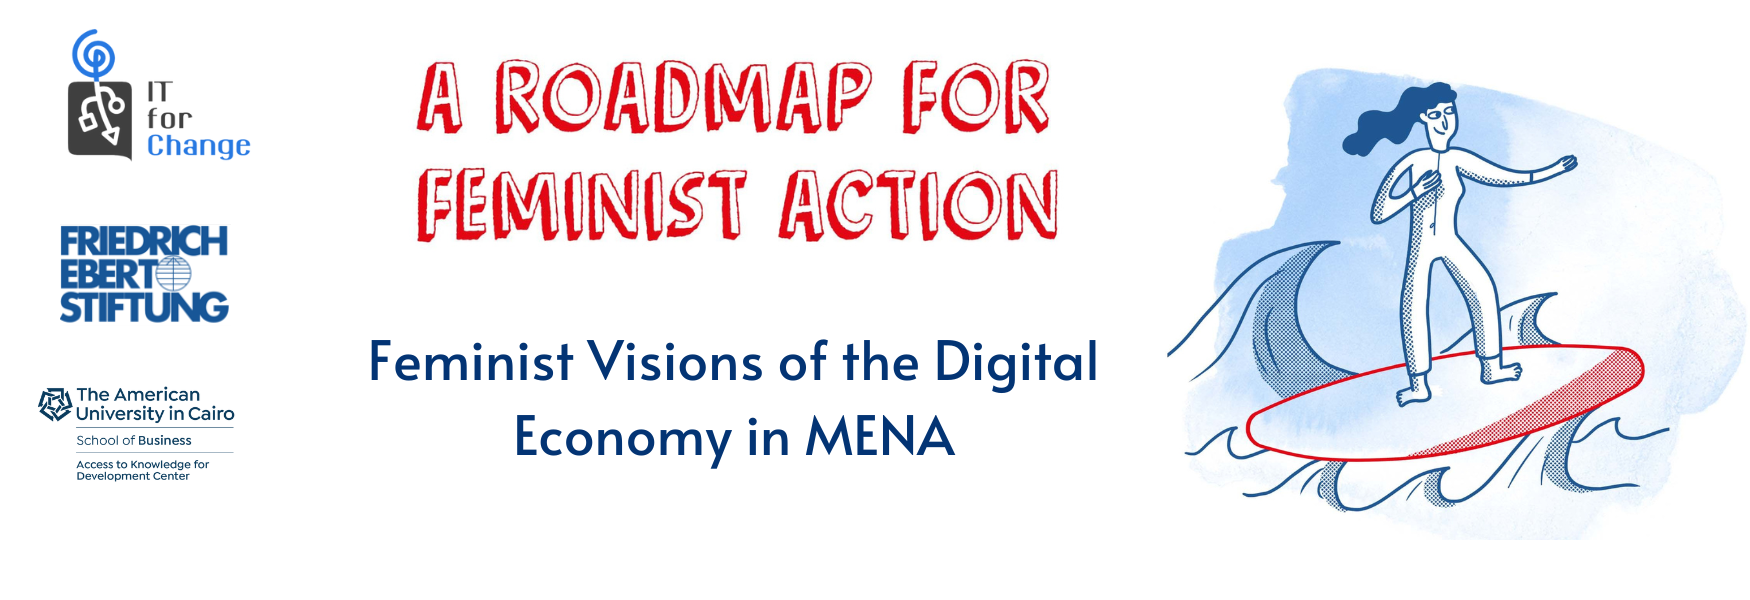 Feminist Visions of the Digital Economy in MENA